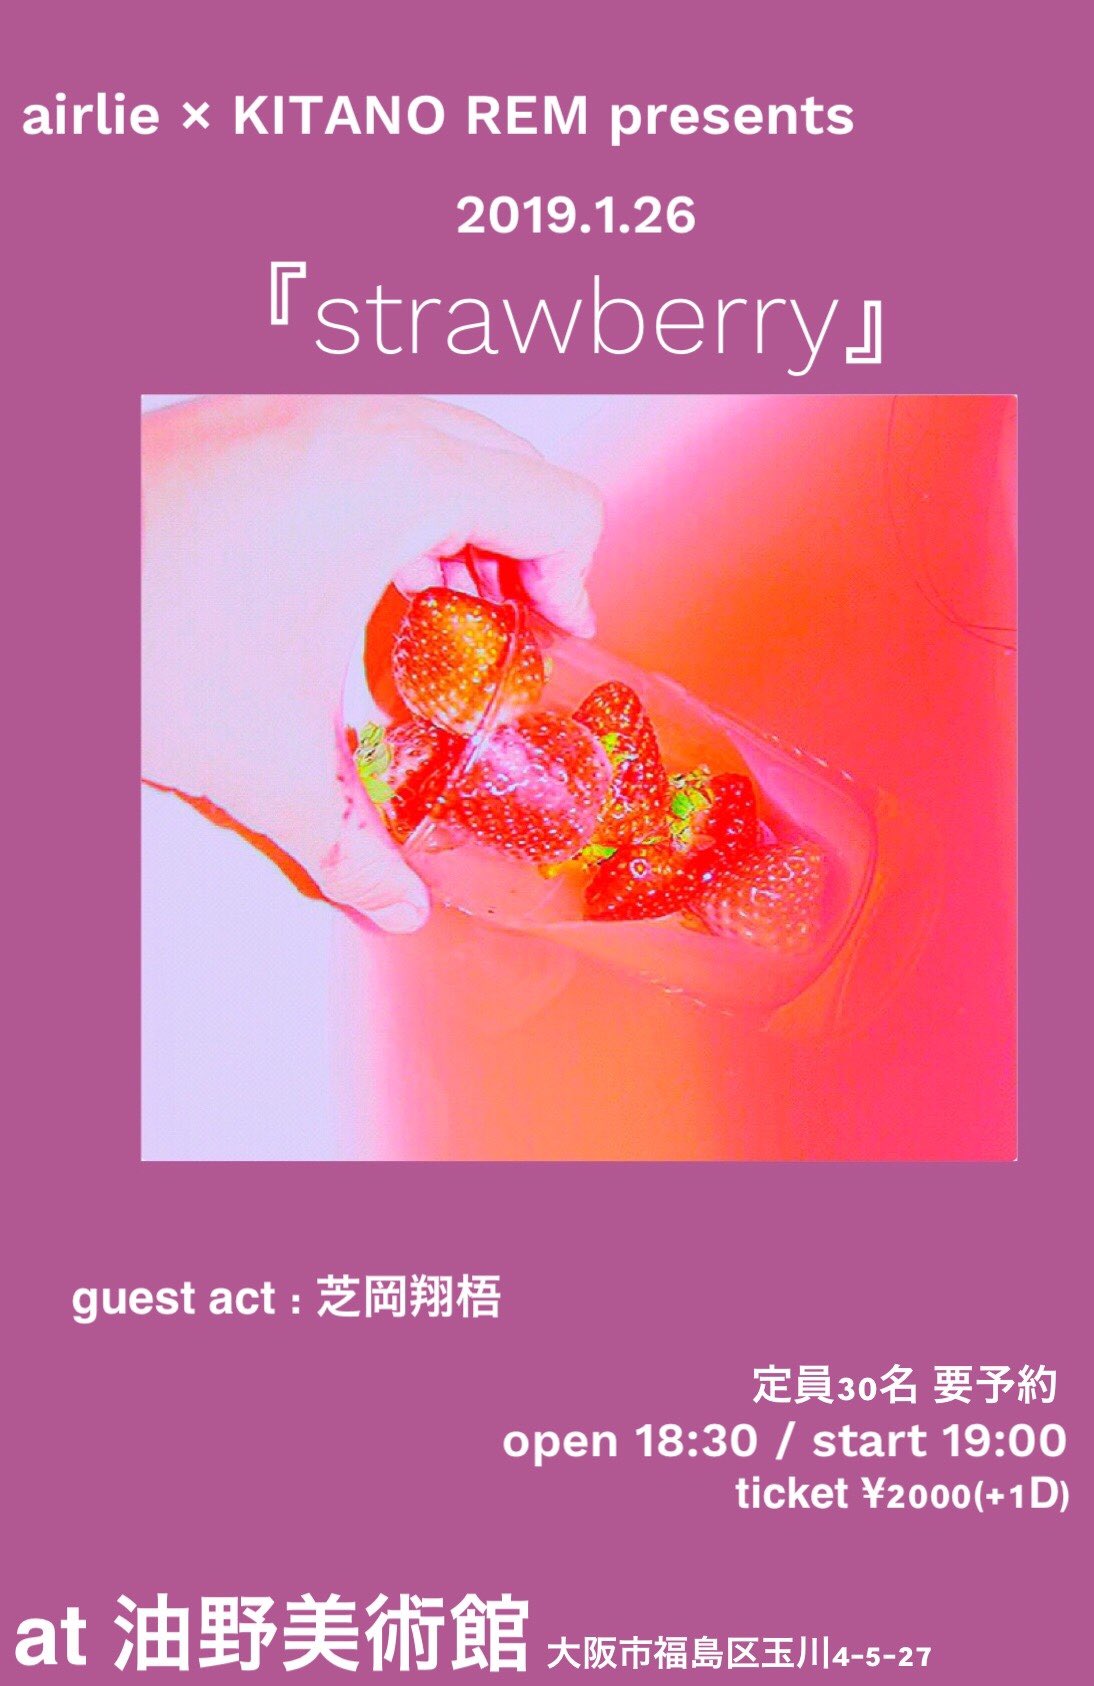 airlie×KITANO REM【strawberry】